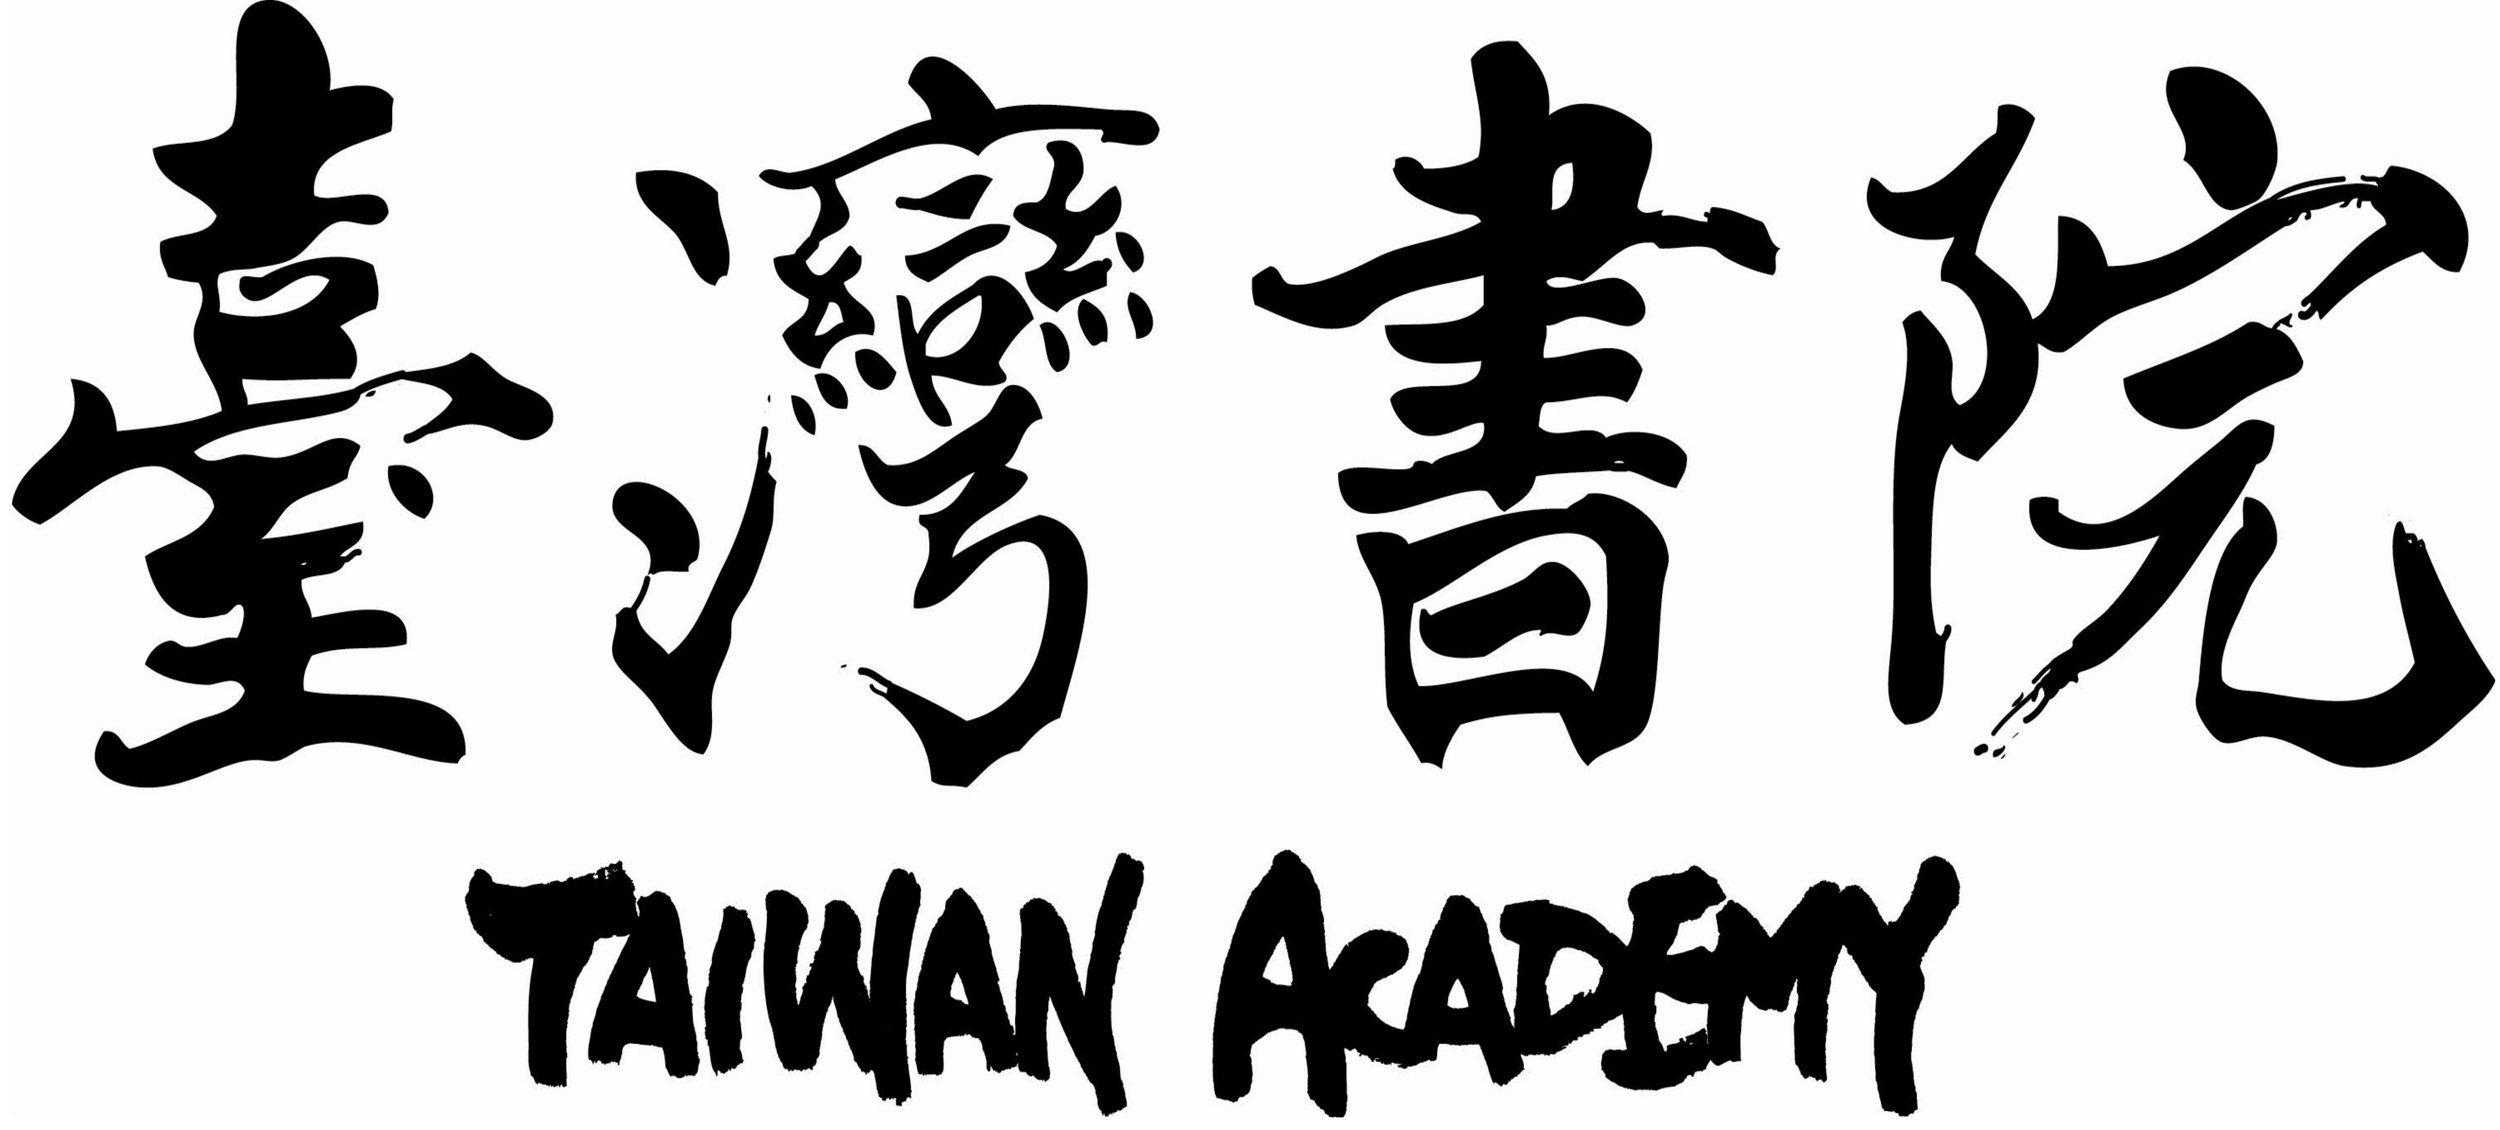 Taiwan+Academy+.jpg